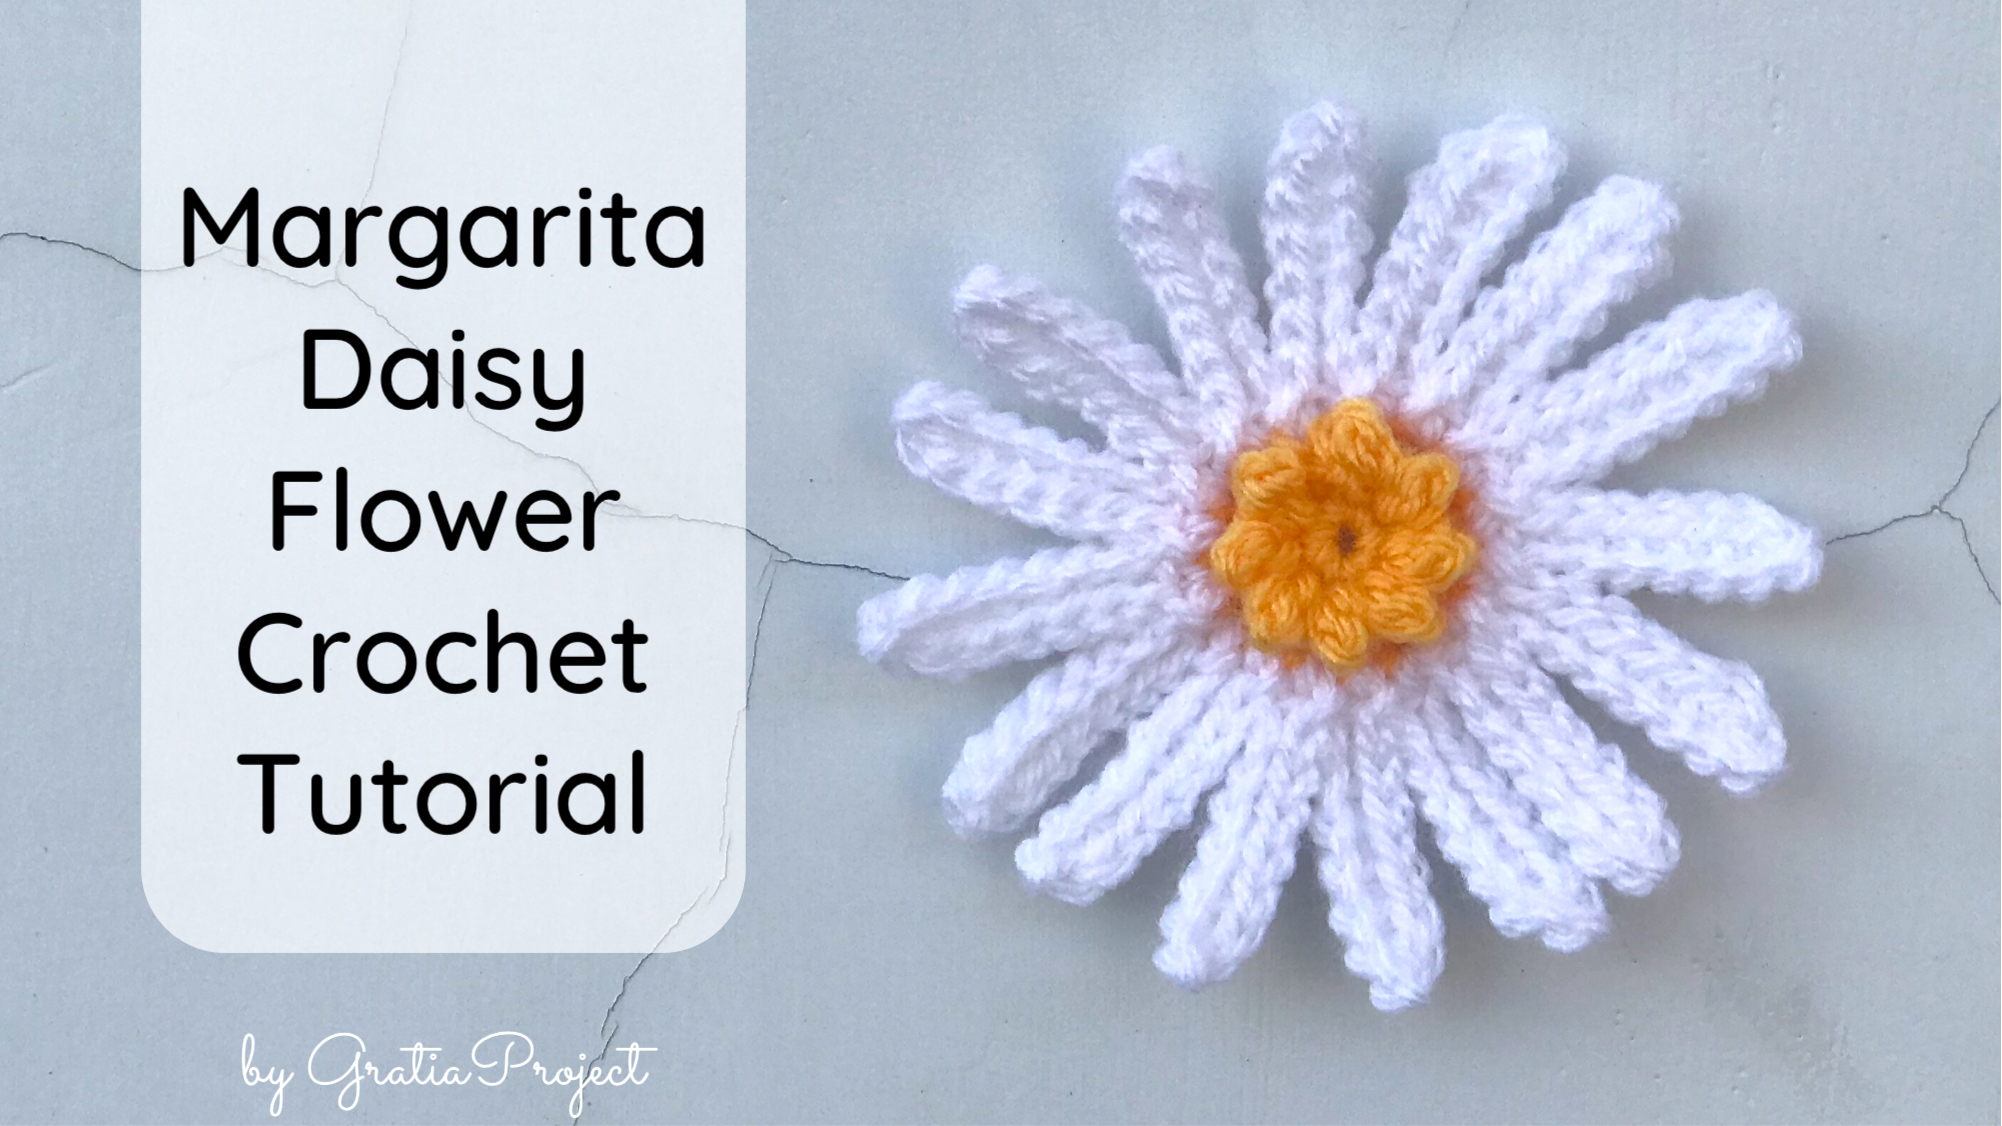 Marguerite (Margarita) Daisy Flower Crochet Tutorial